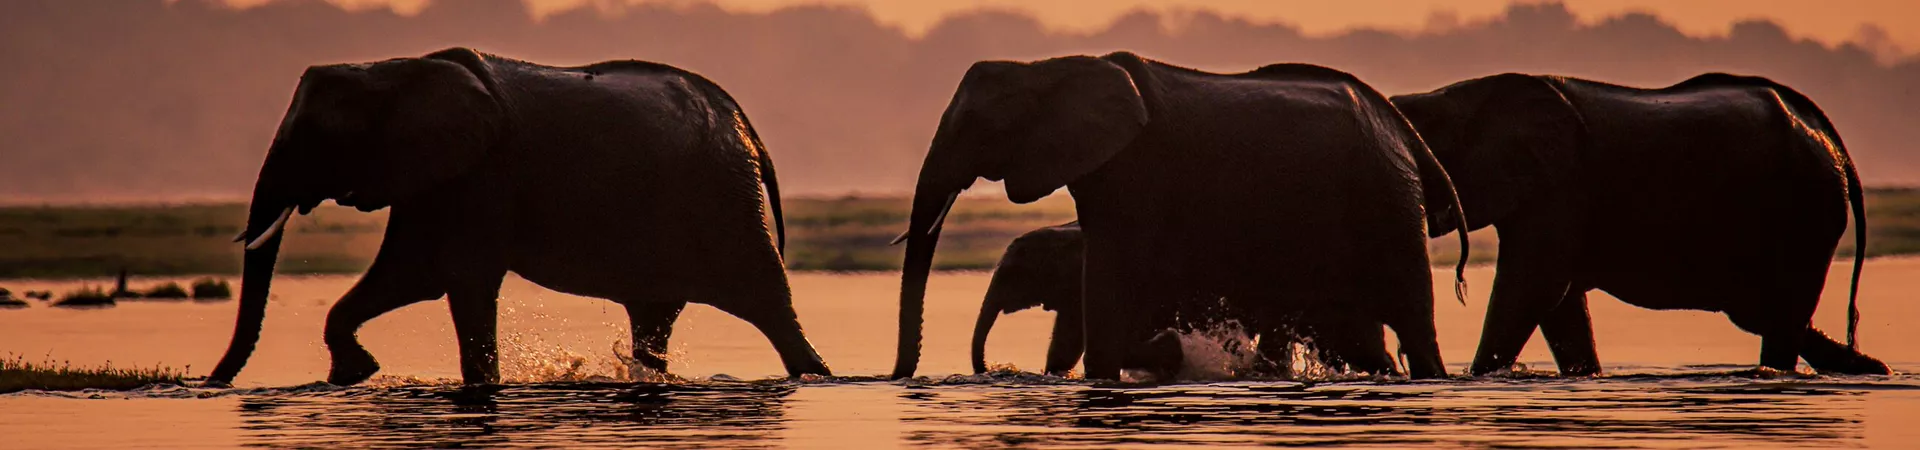 Elephants at dusk during a boat safari tour in Chobe River, Botswana